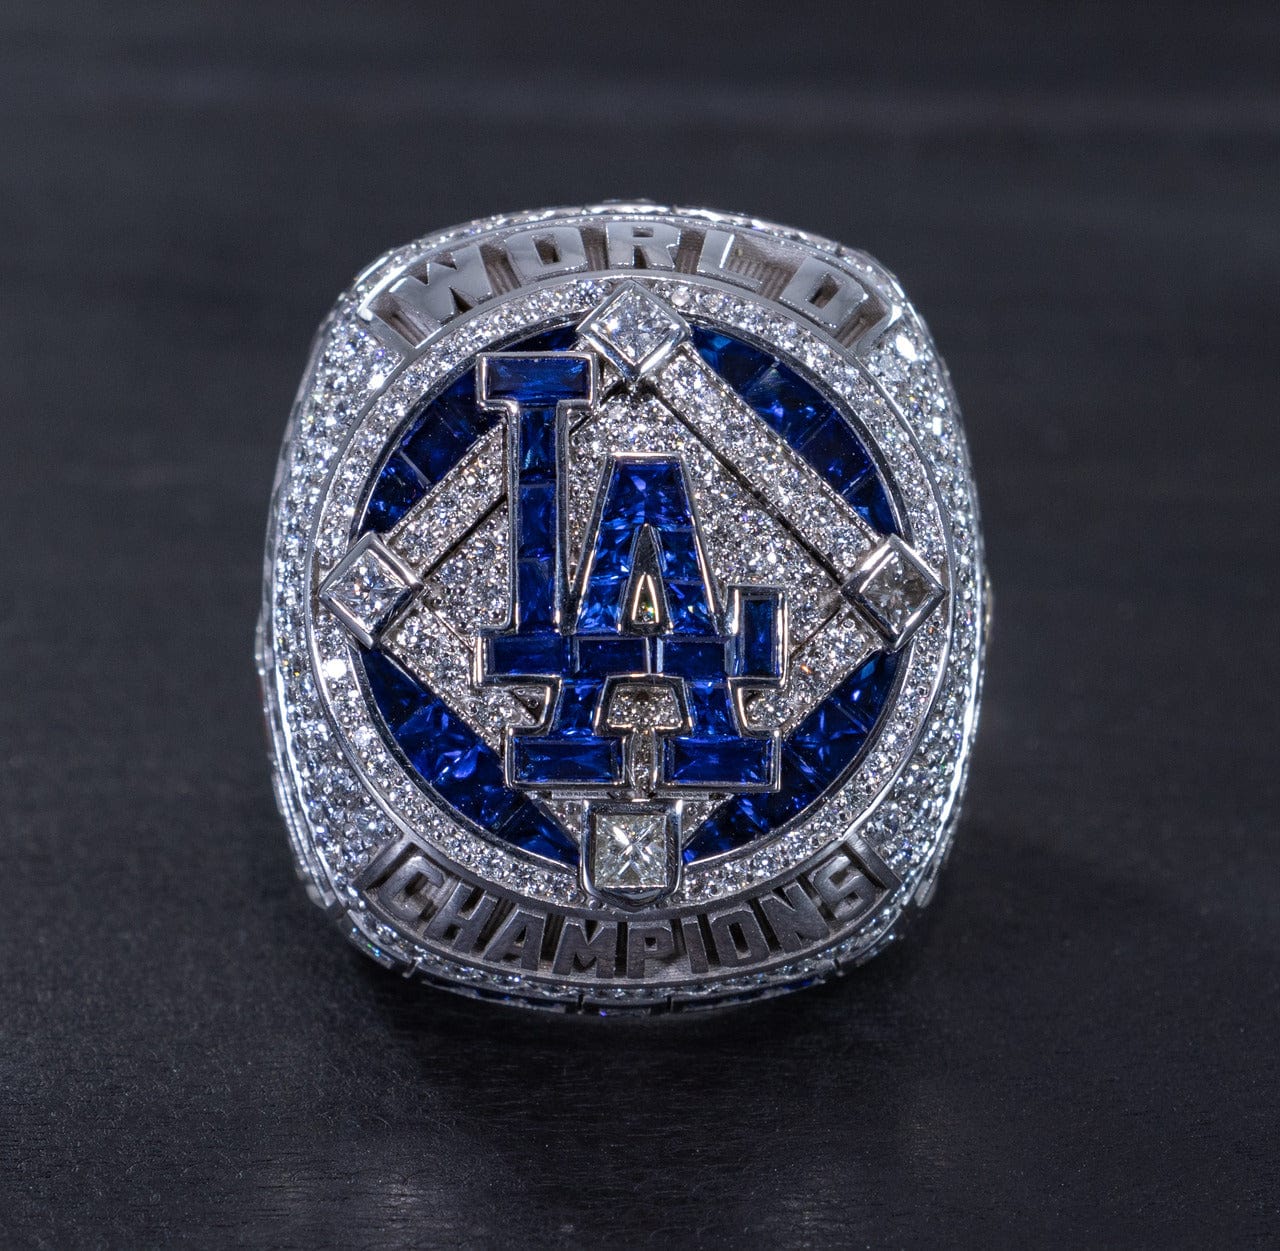 Dodgers Staff Members Receive Their 2020 World Series Rings